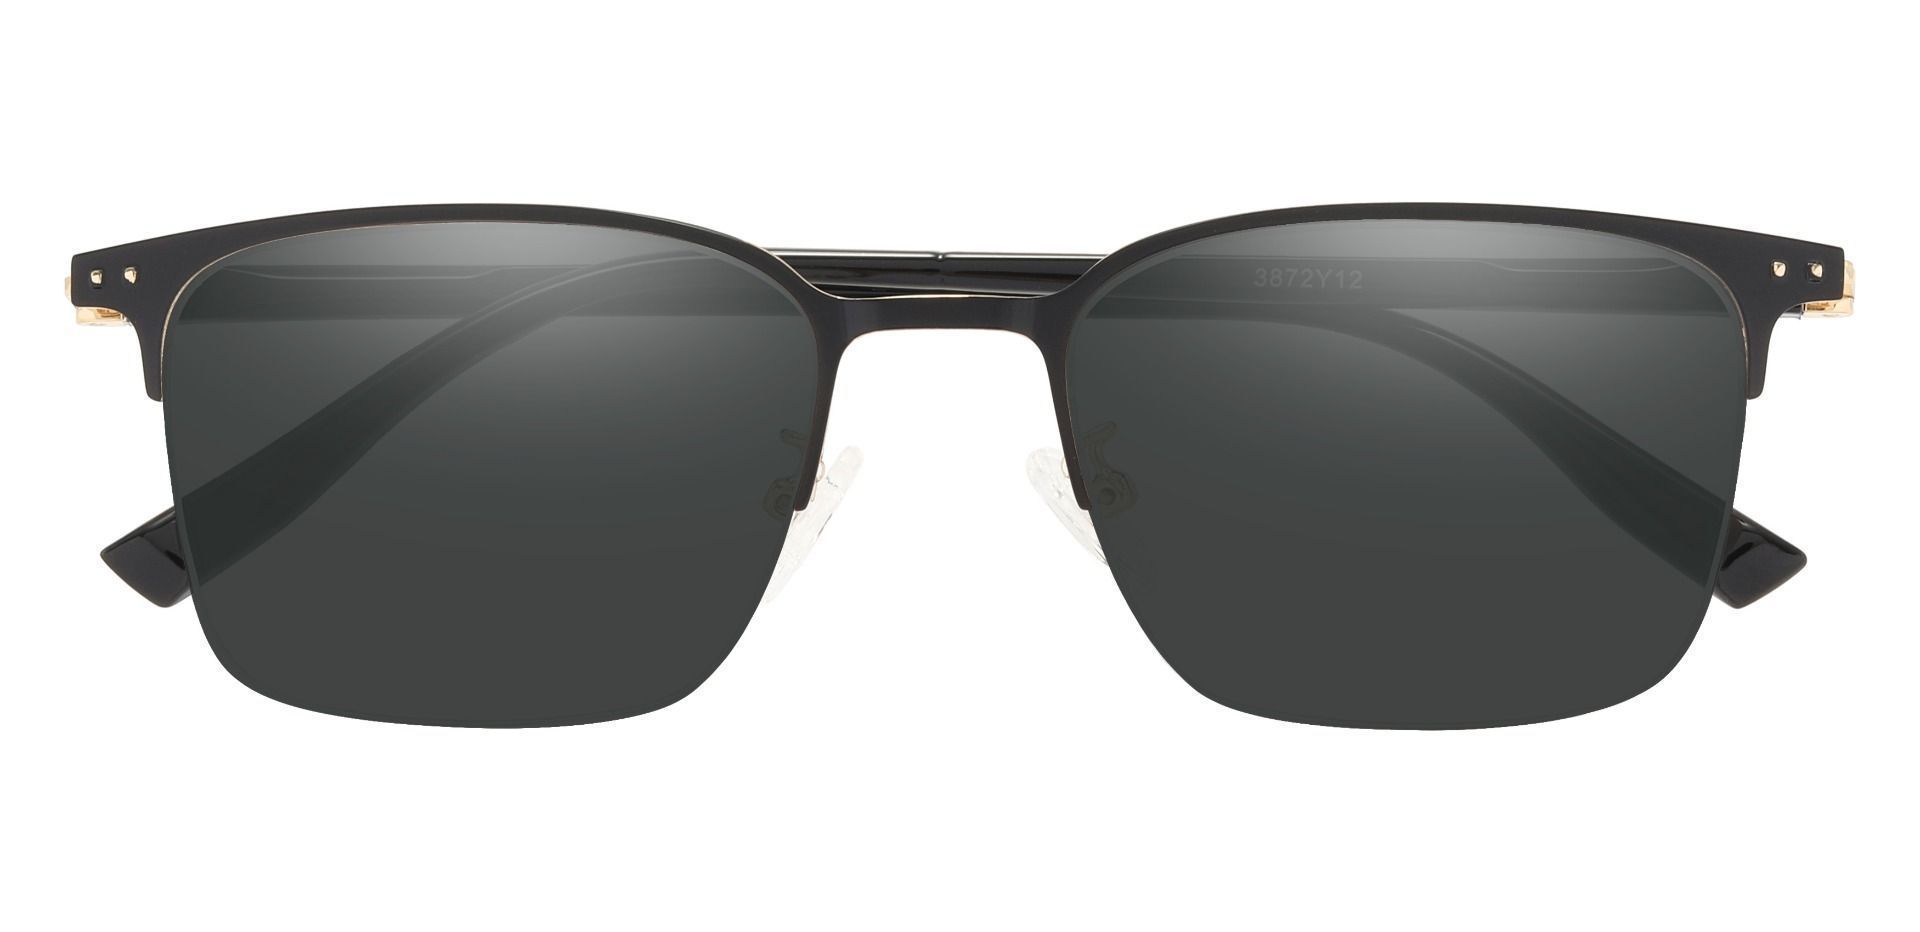 Preston Rectangle Prescription Sunglasses - Black Frame With Gray Lenses